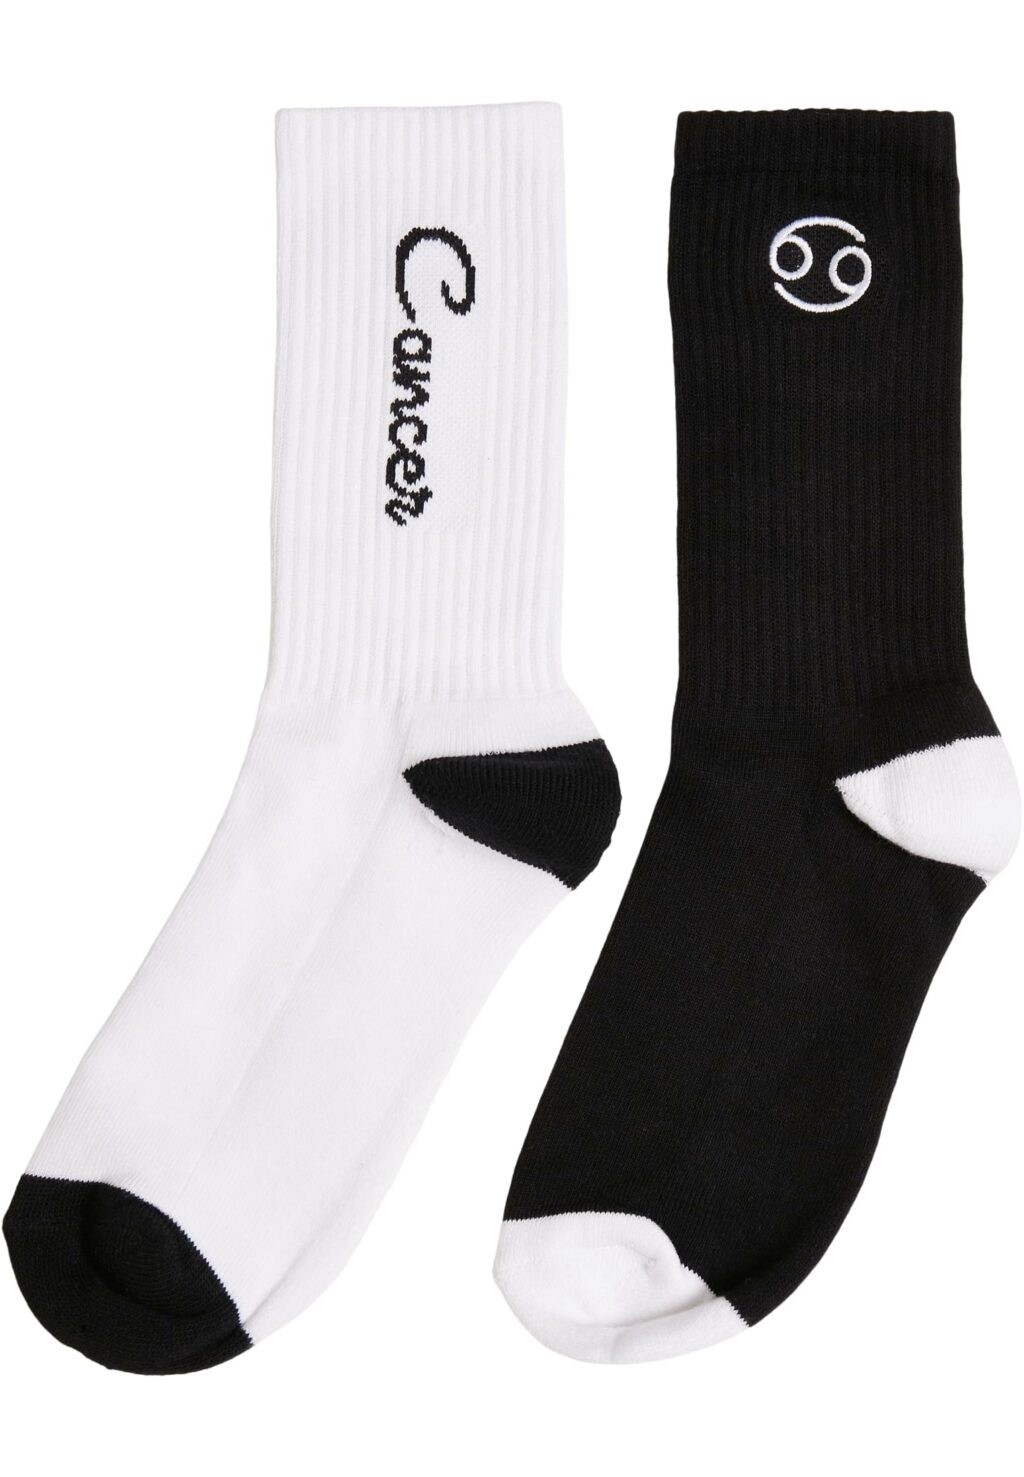 Zodiac Socks 2-Pack black/white cancer MT2235